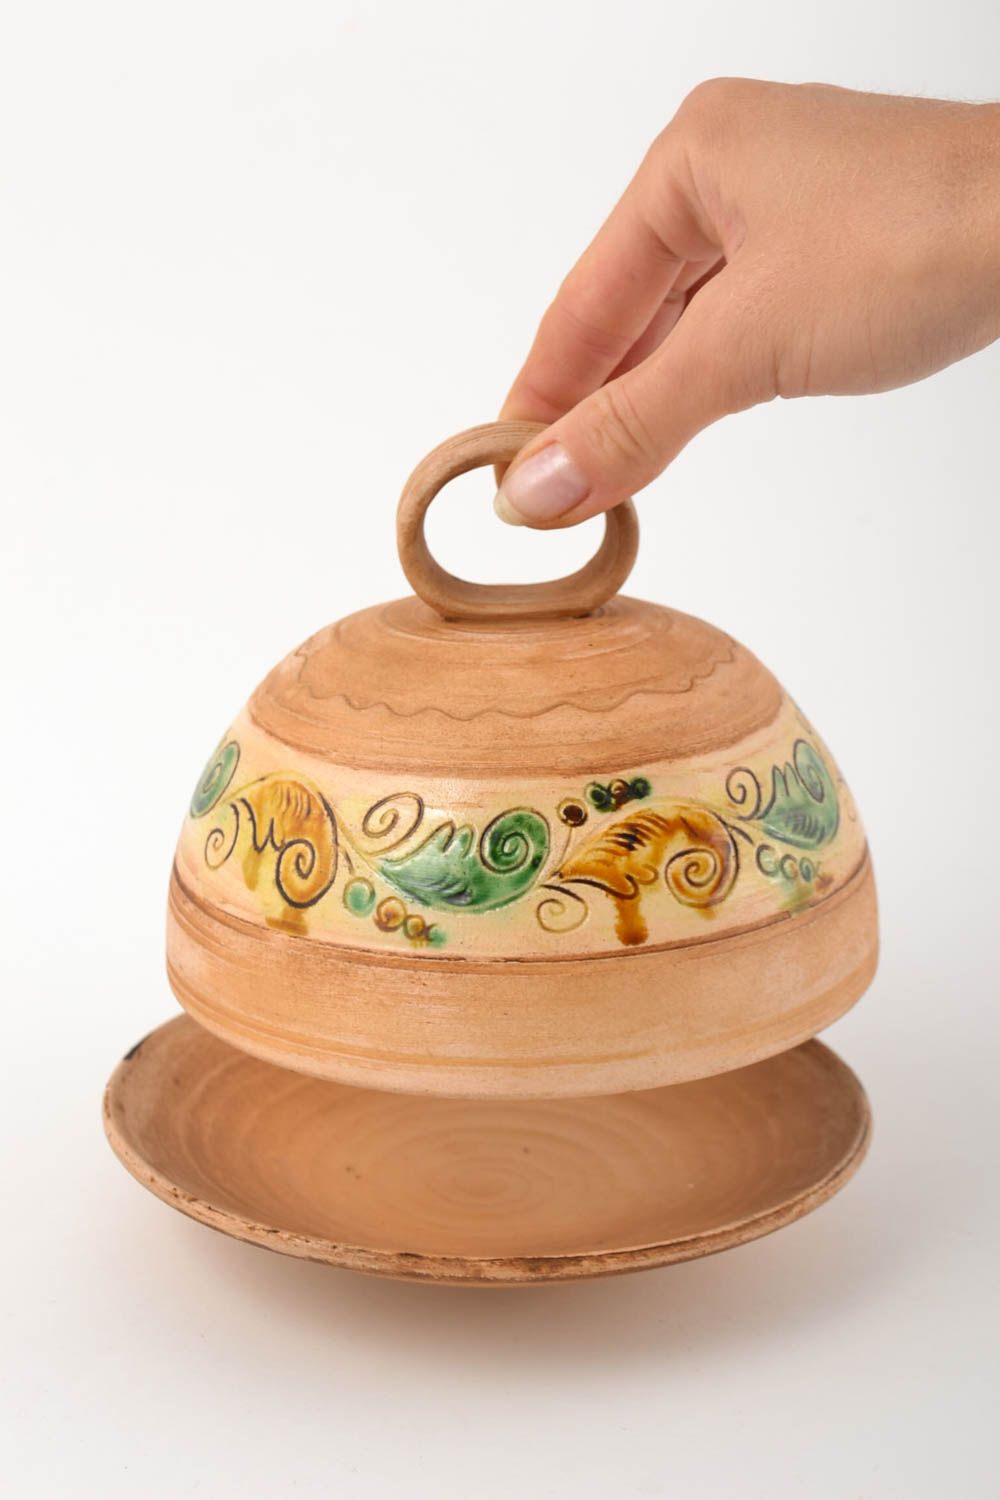 Schüssel mit Deckel handmade Teller Keramik Designer Geschirr Geschenk Ideen foto 2